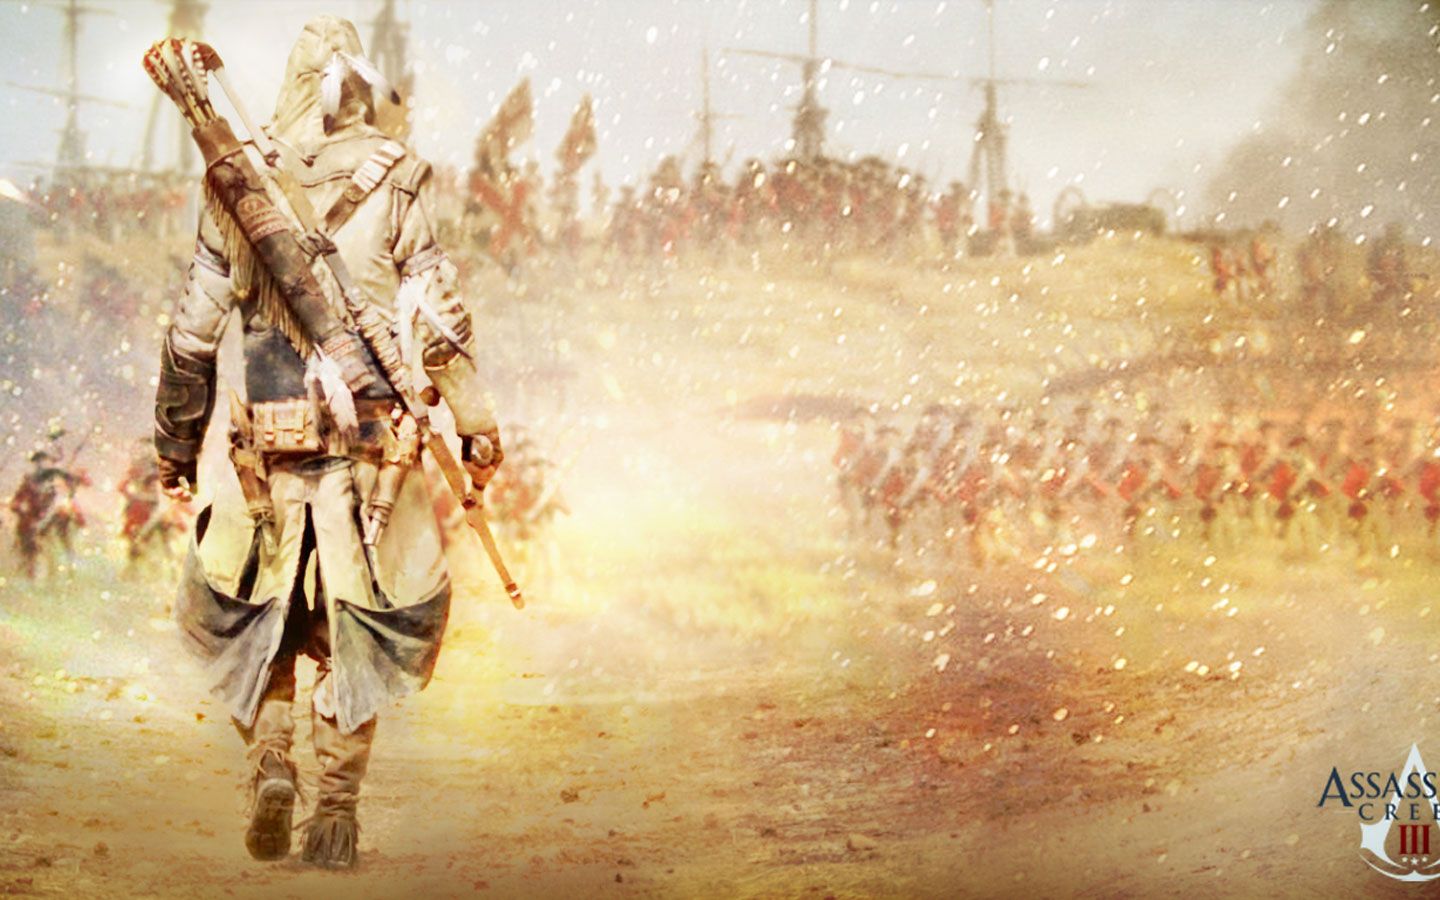 Assassin's Creed 3 - The Assassin's Wallpaper (31818501) - Fanpop